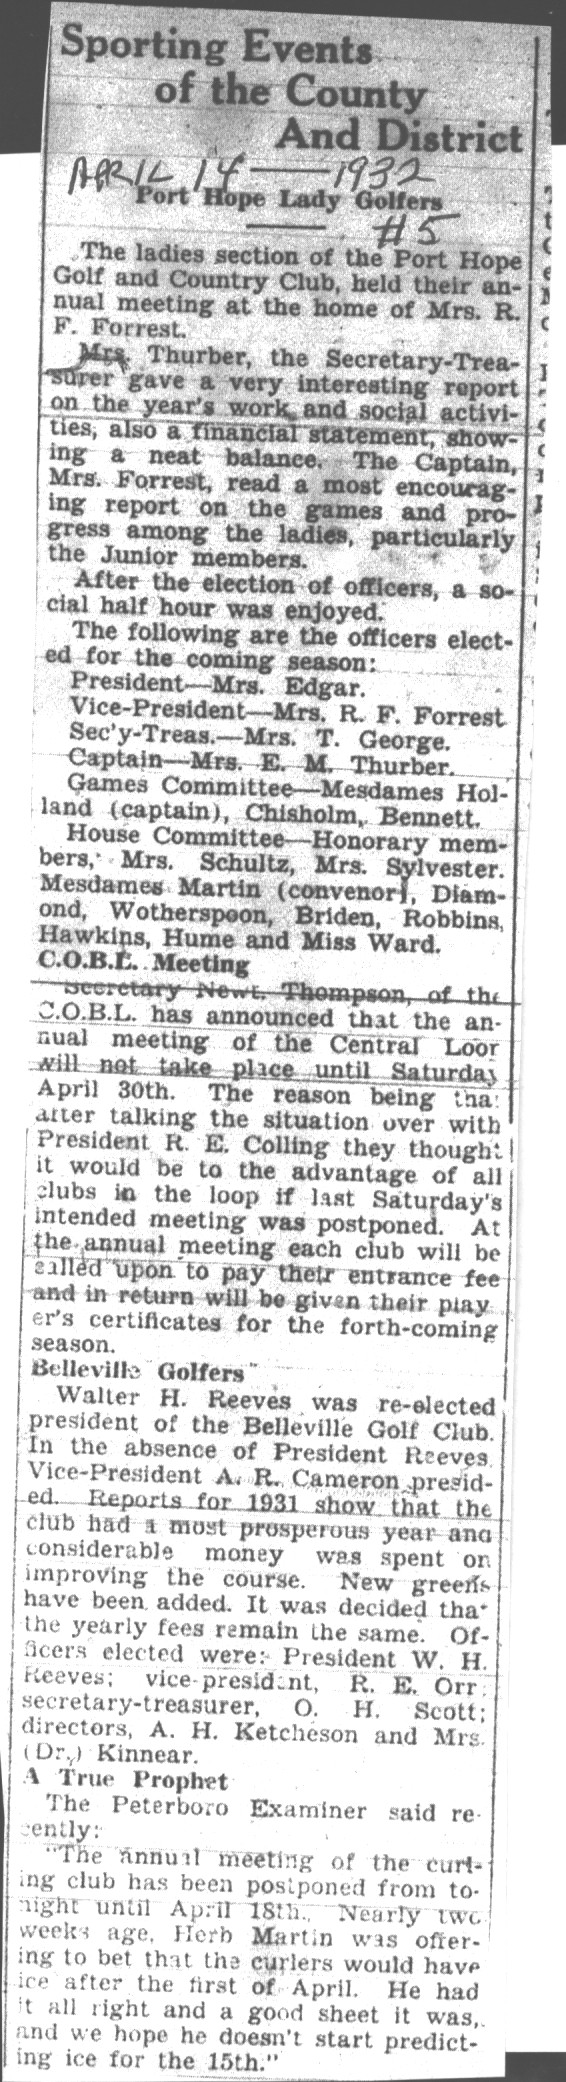 1932-04-14 Golf -PH ladies hold annual meeting